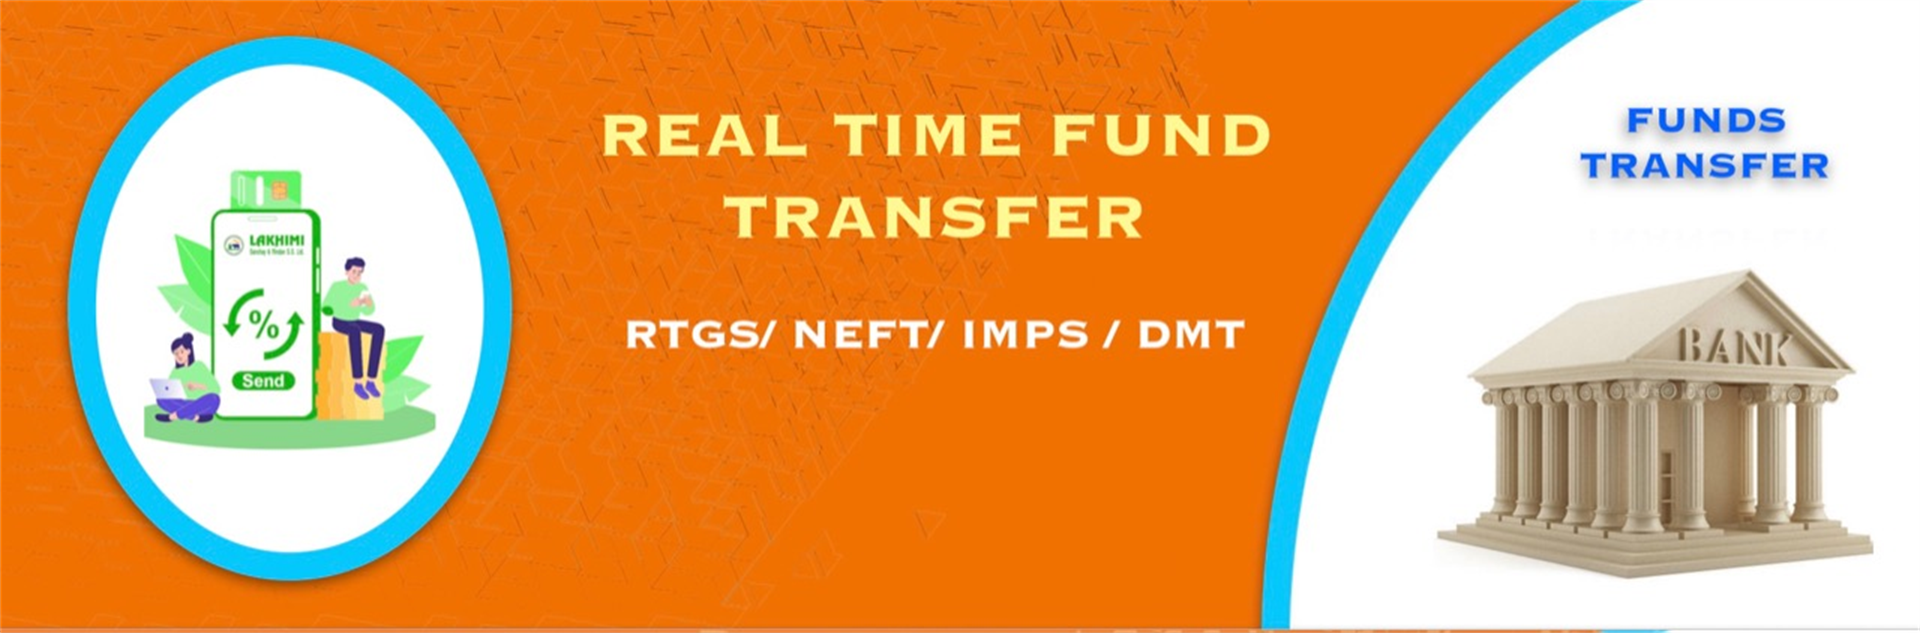 Fund transfer